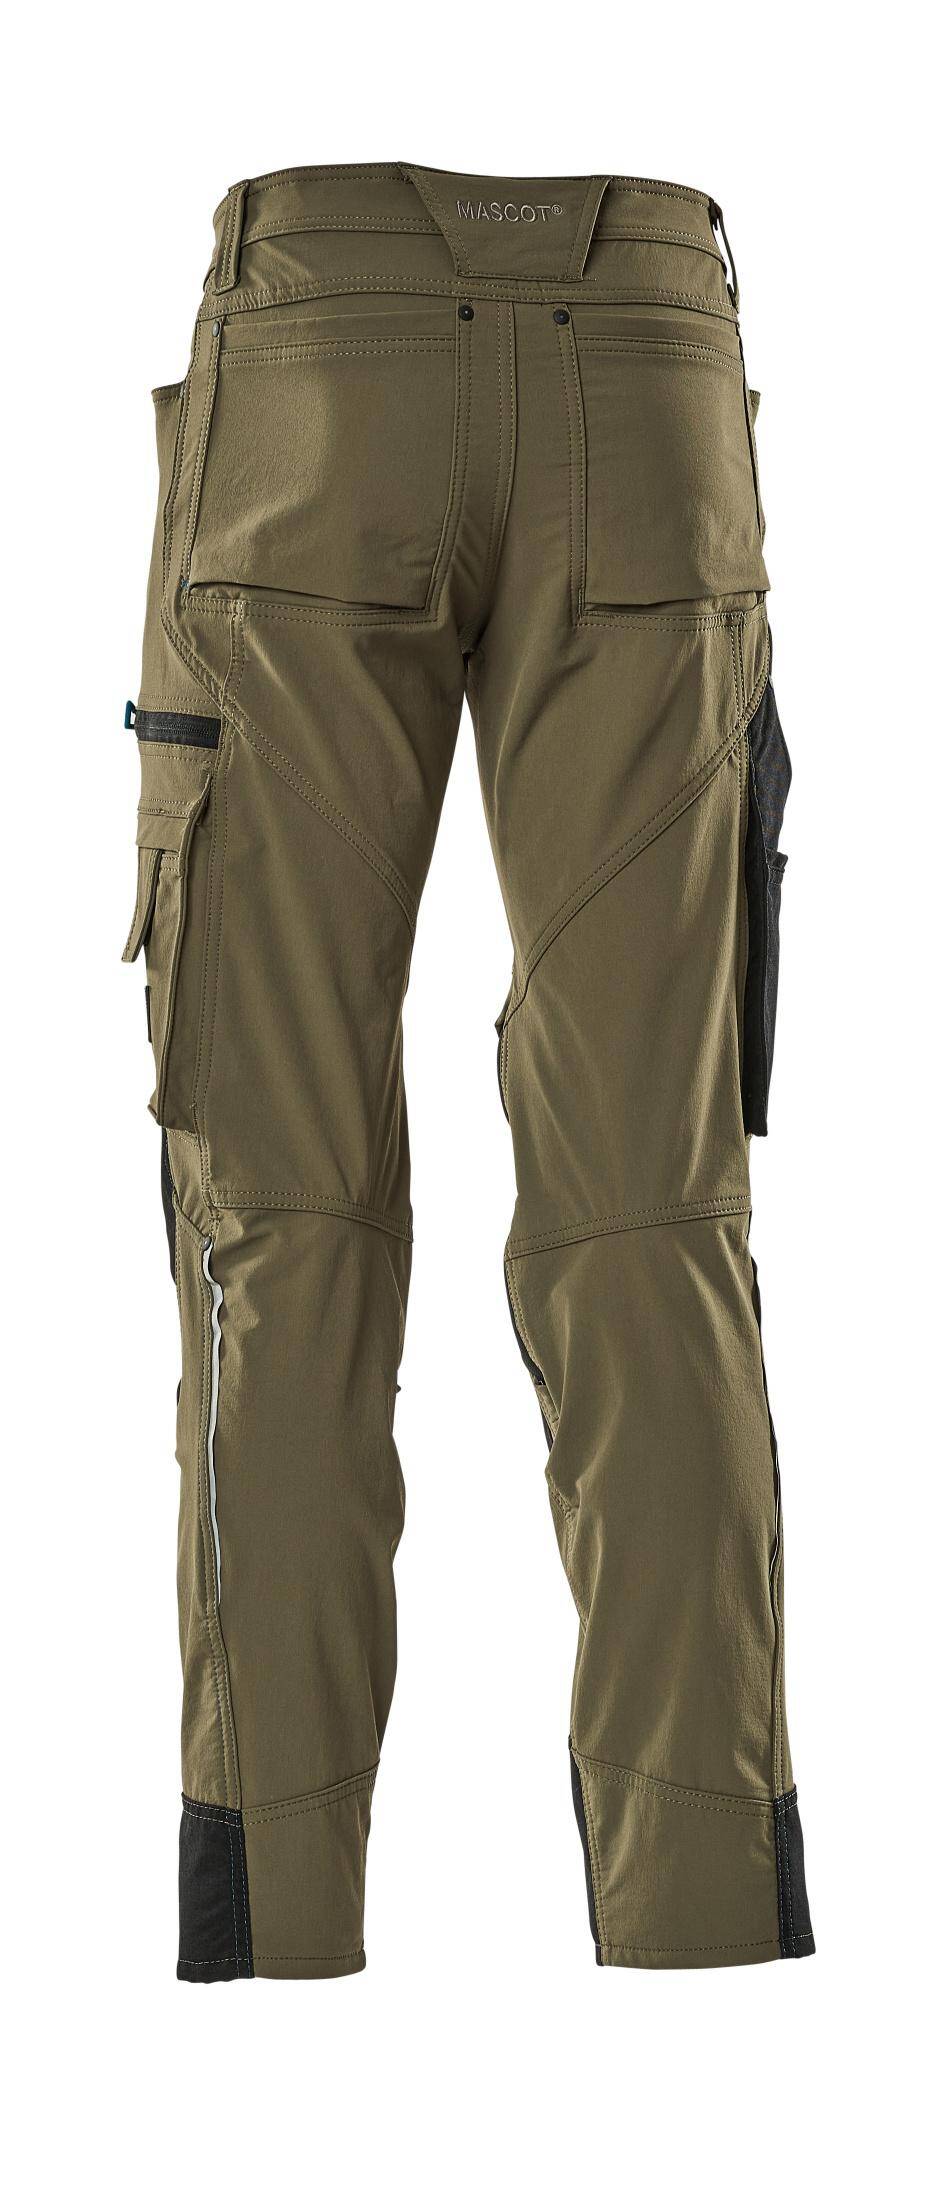 Trousers with kneepad pockets Advanced khaki (Photo 2)